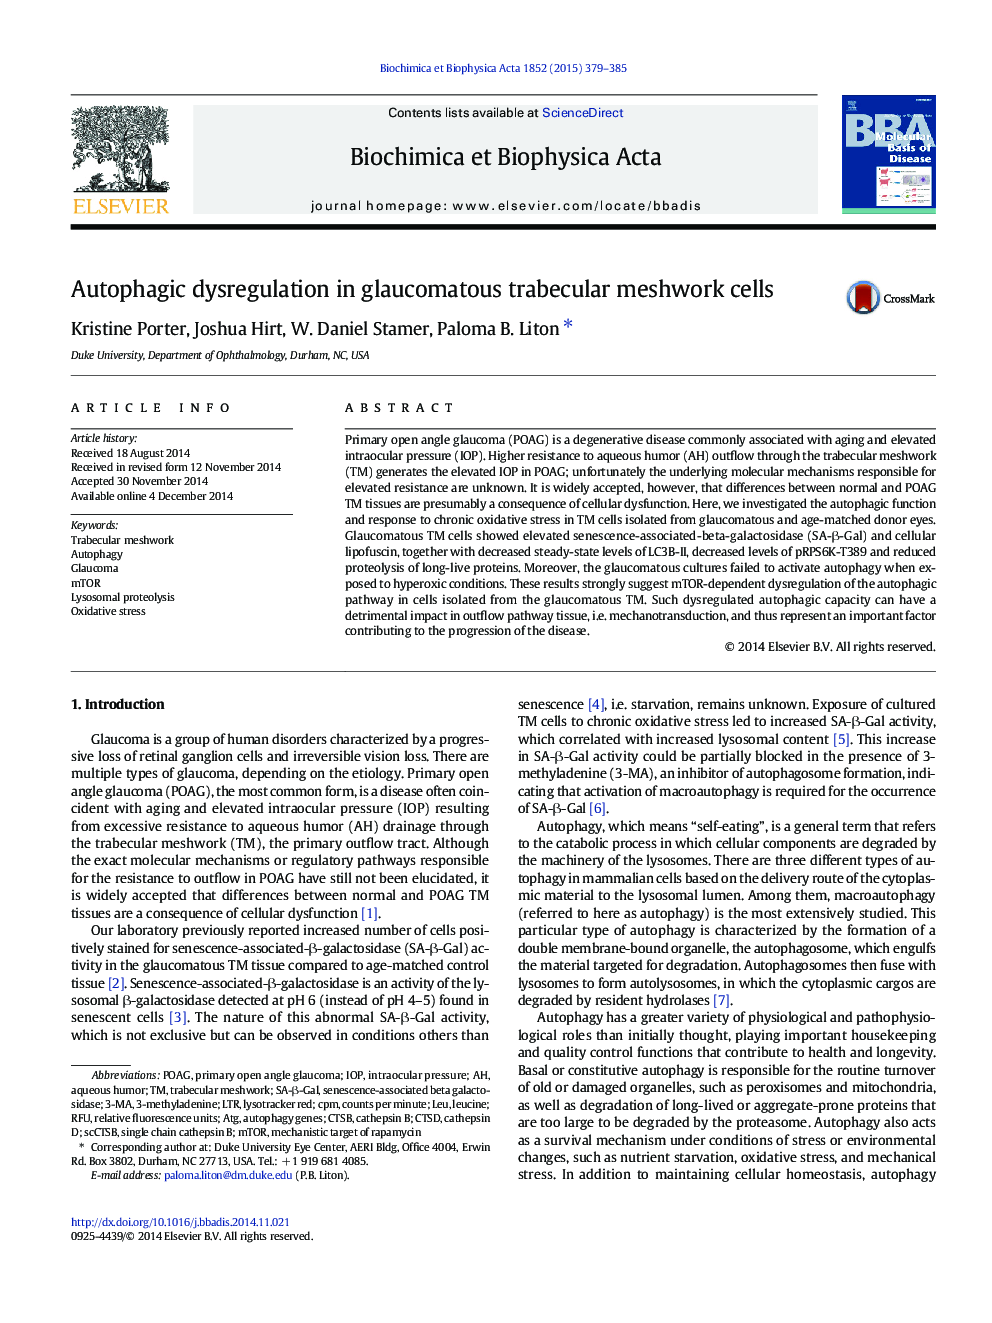 Autophagic dysregulation in glaucomatous trabecular meshwork cells